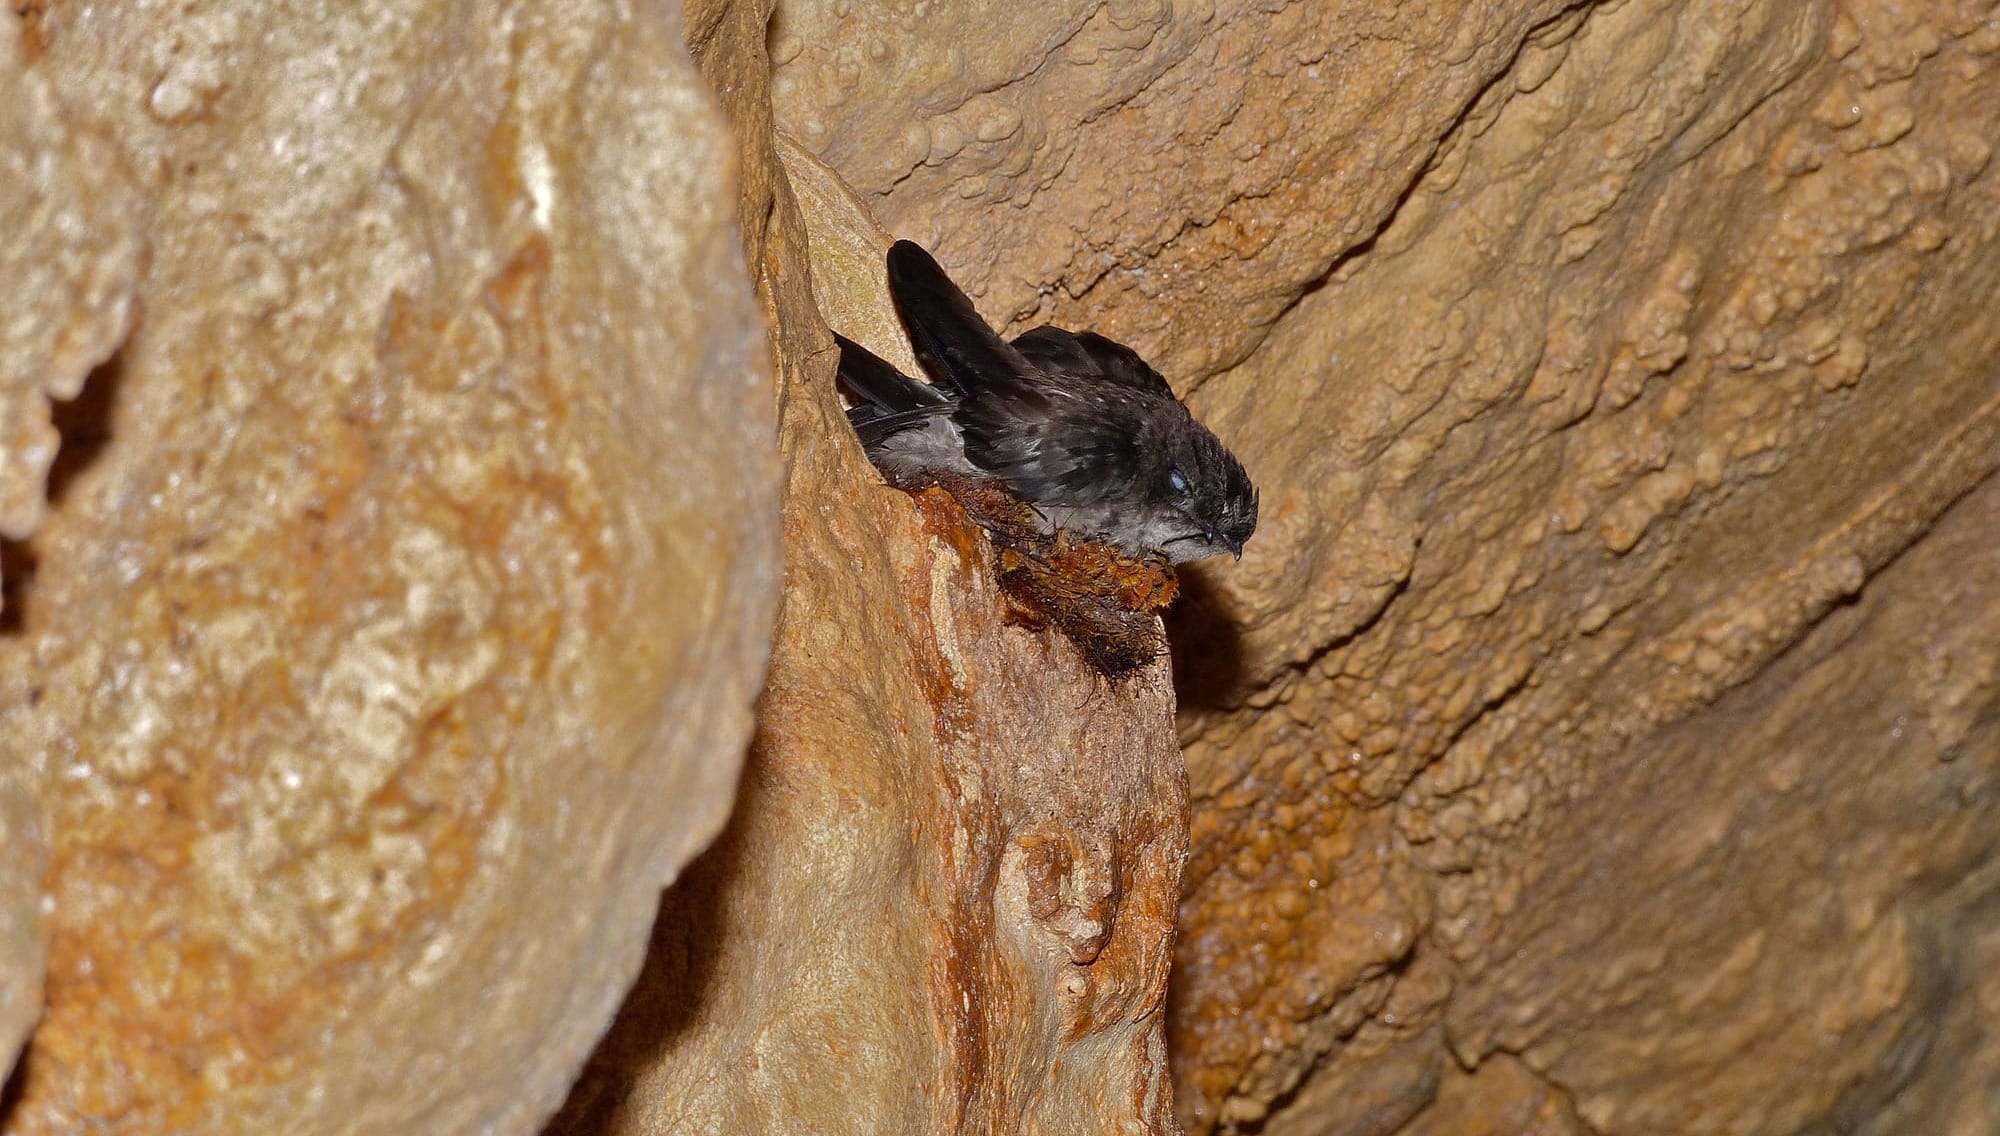 Swiftlet bird building nest in limestone cave walls